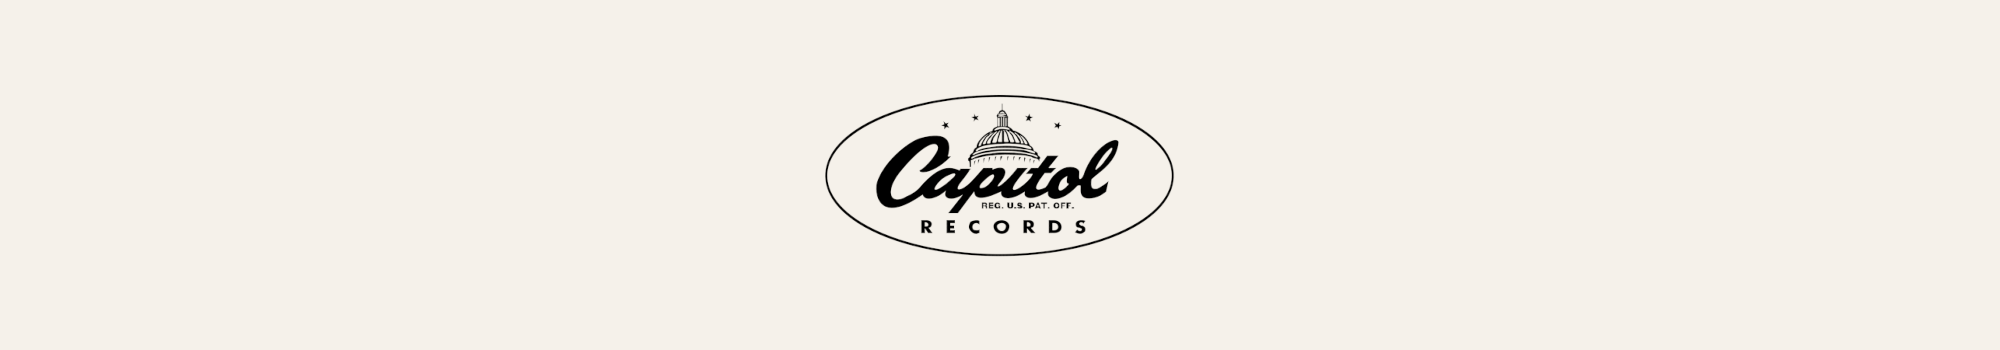 Capitol Records logotyp